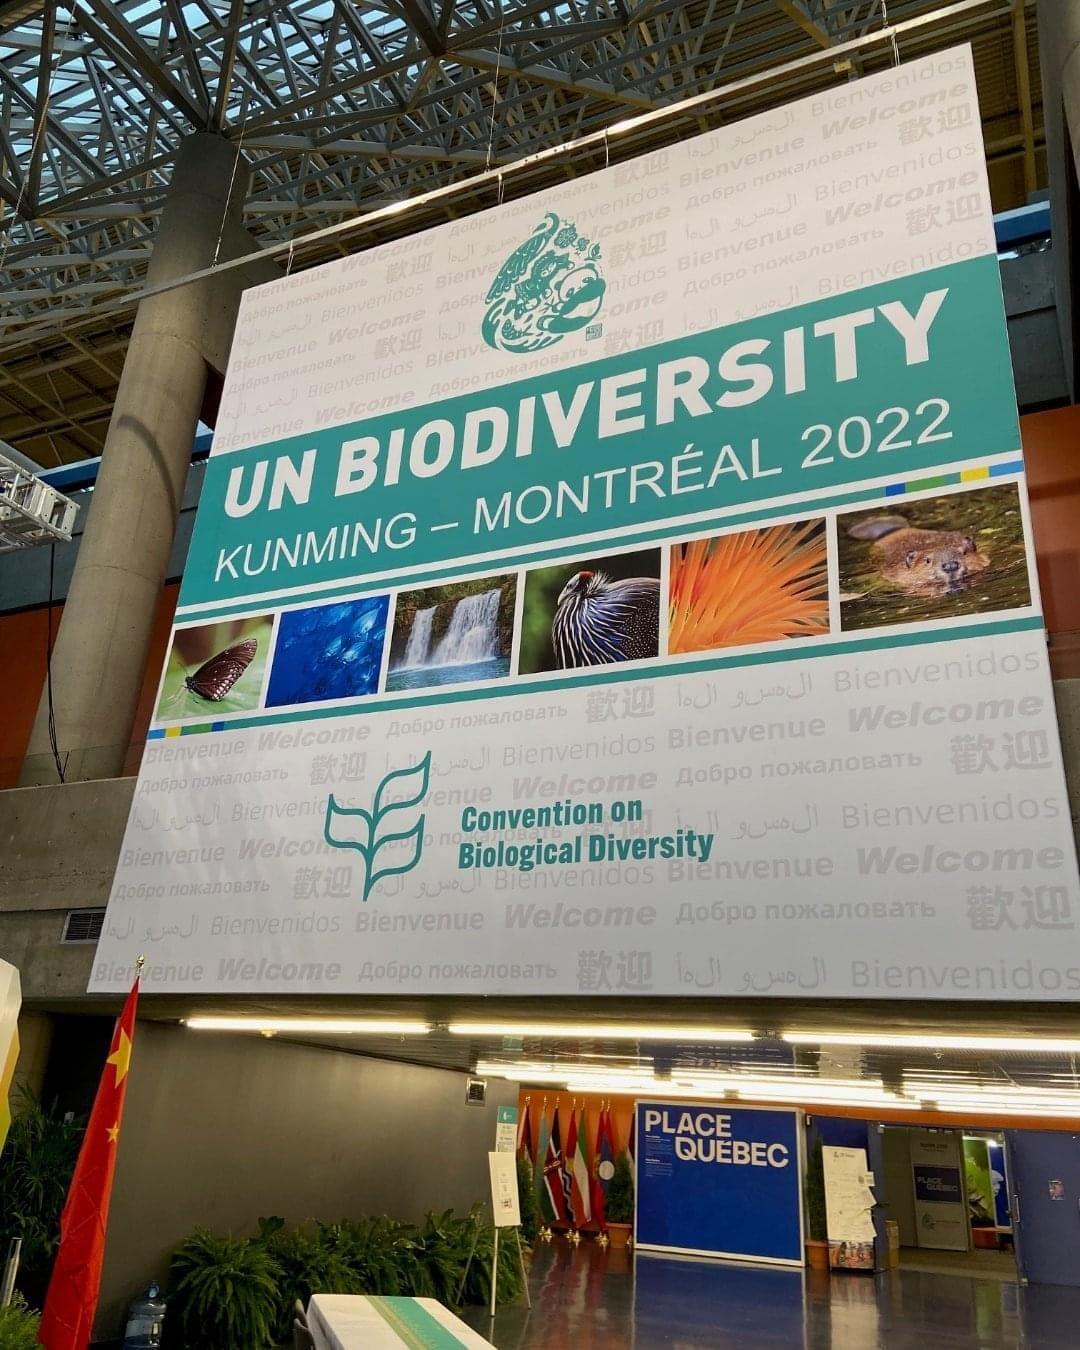 Sign that reads: "UN Biodiversity"